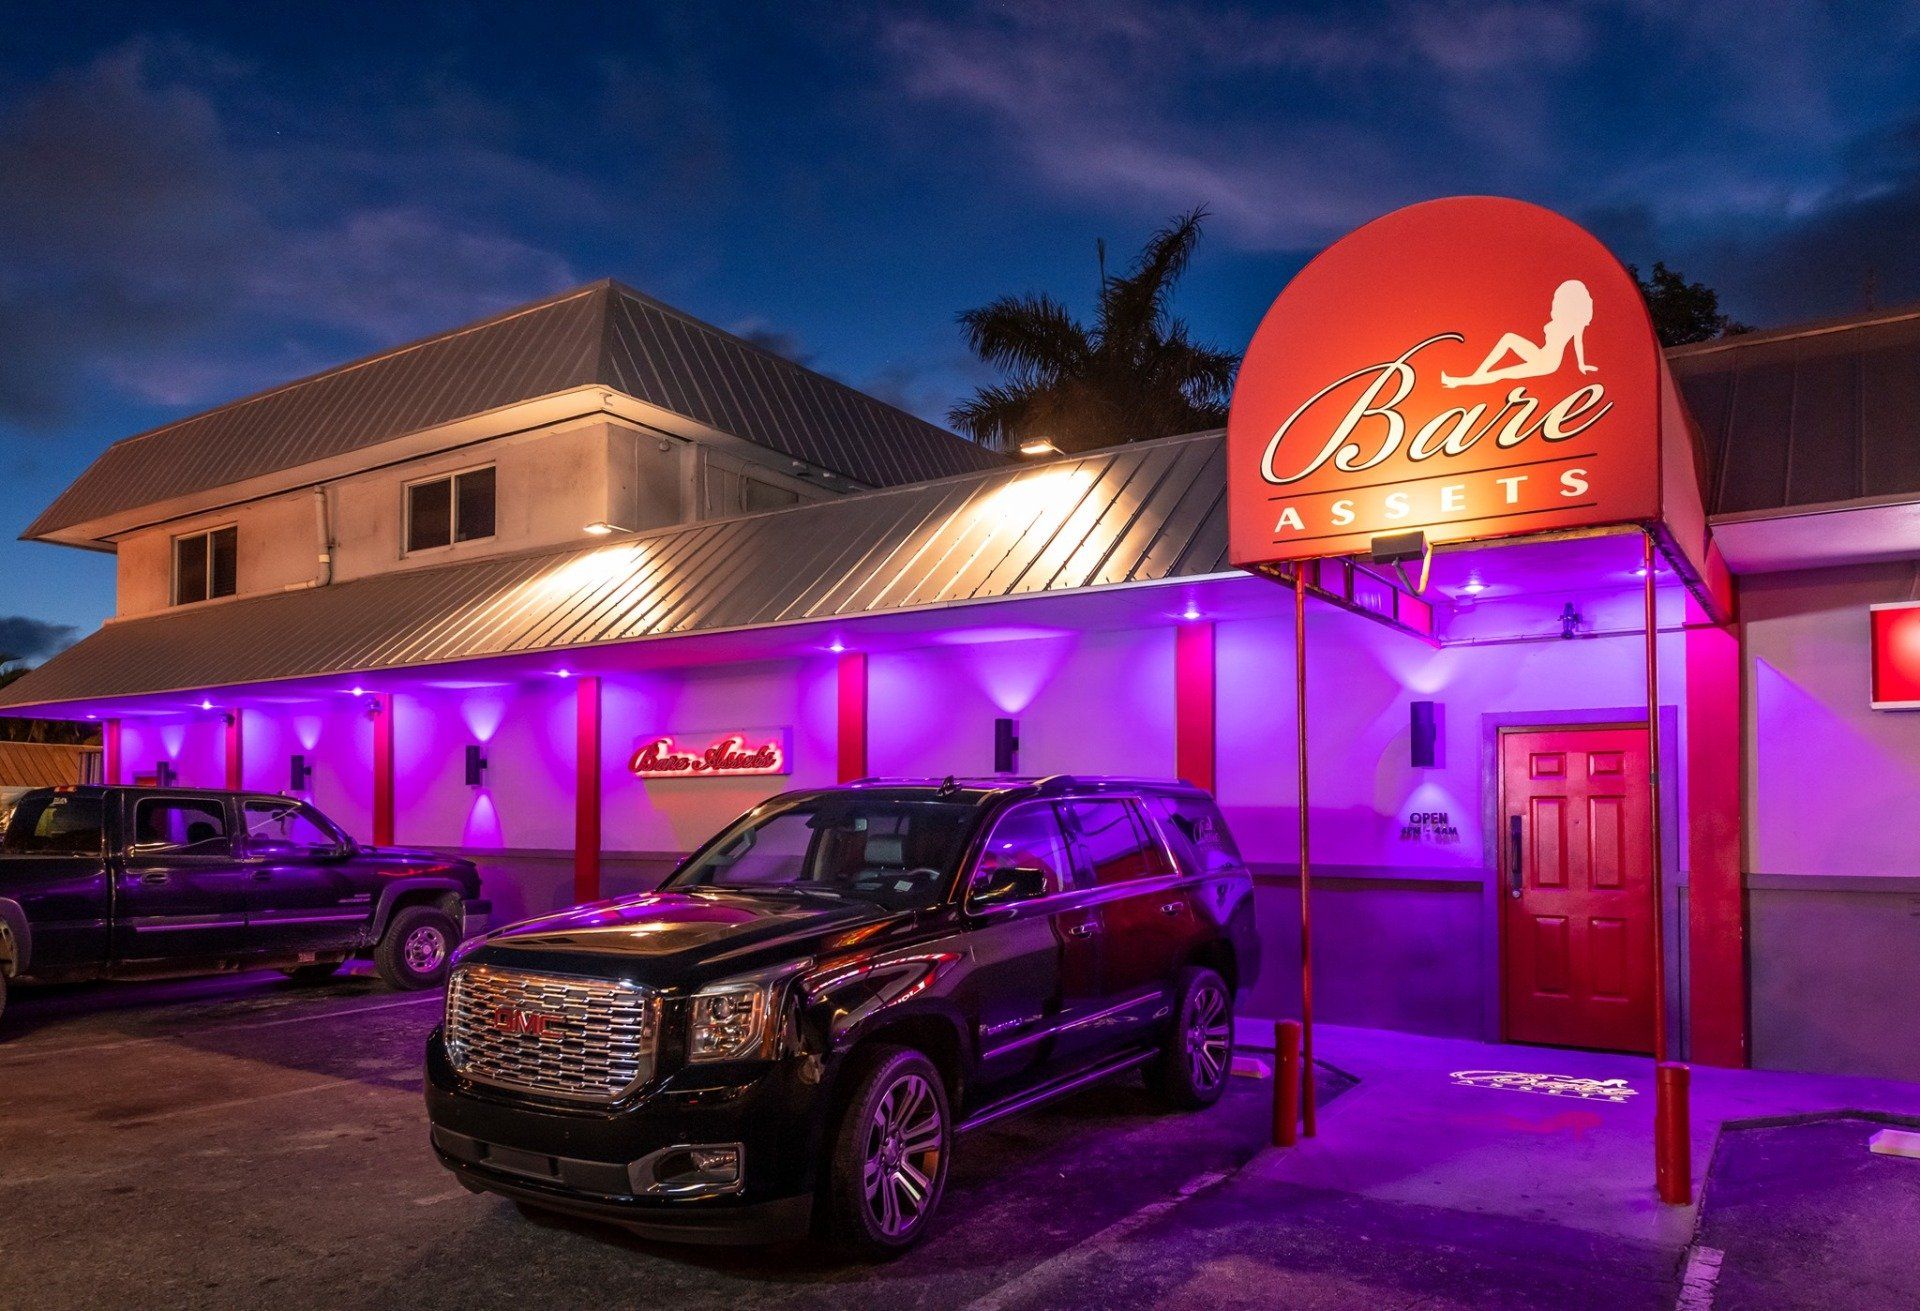 Bare Assets Strip Club Key West, FL